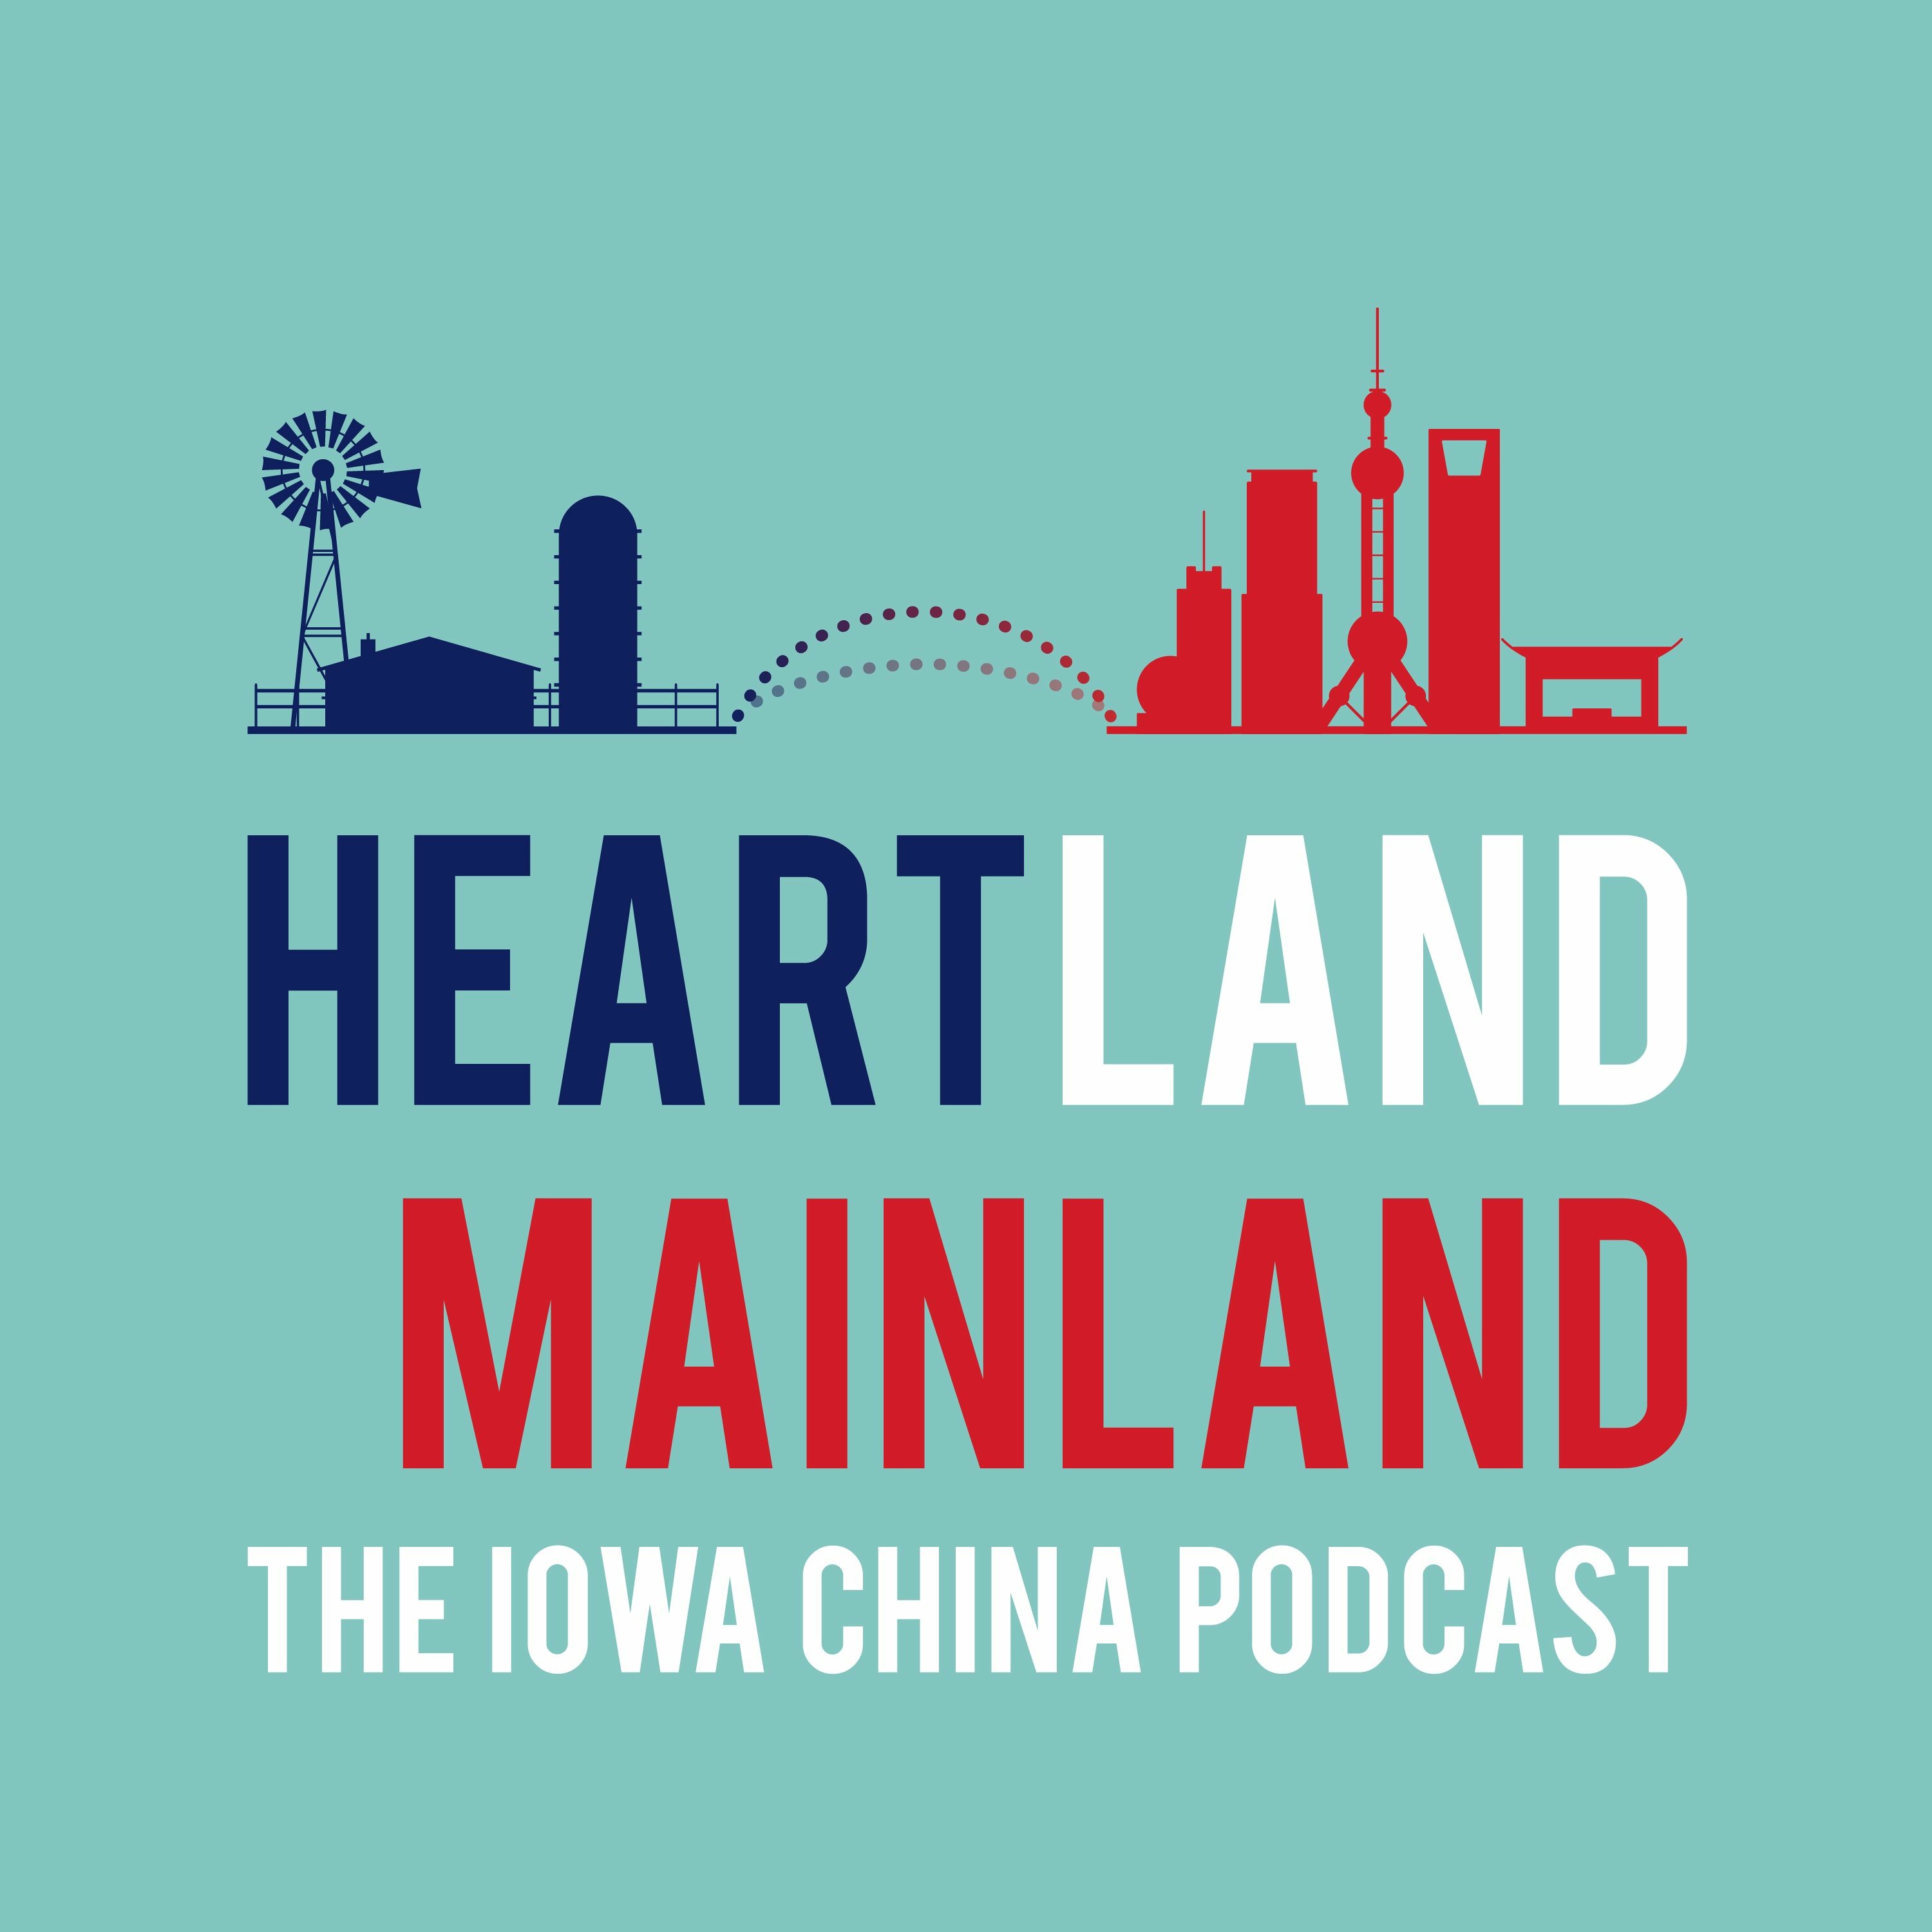 Introducing Heartland Mainland: The Iowa China Podcast